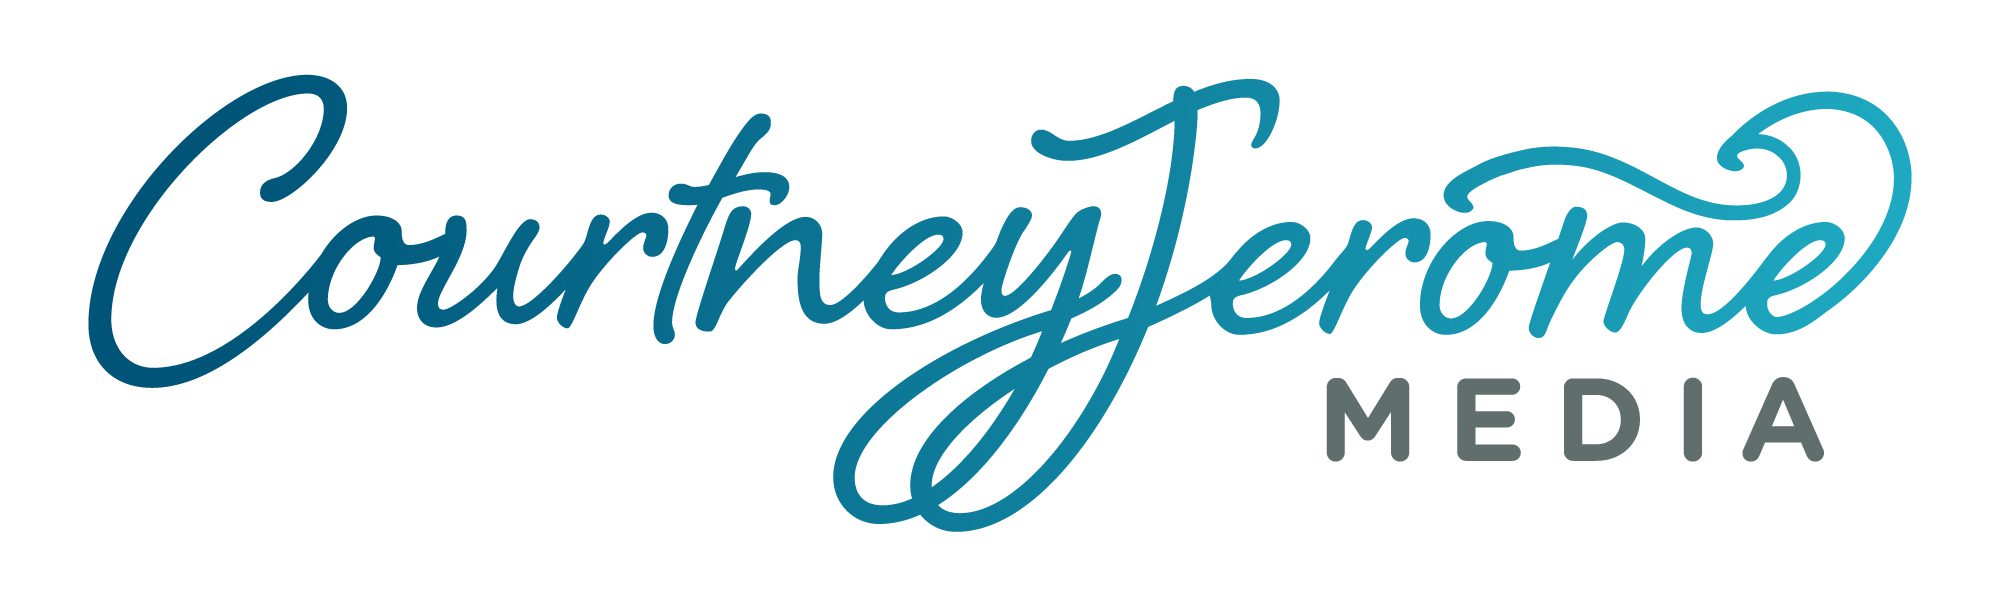 courtney jerome media logo